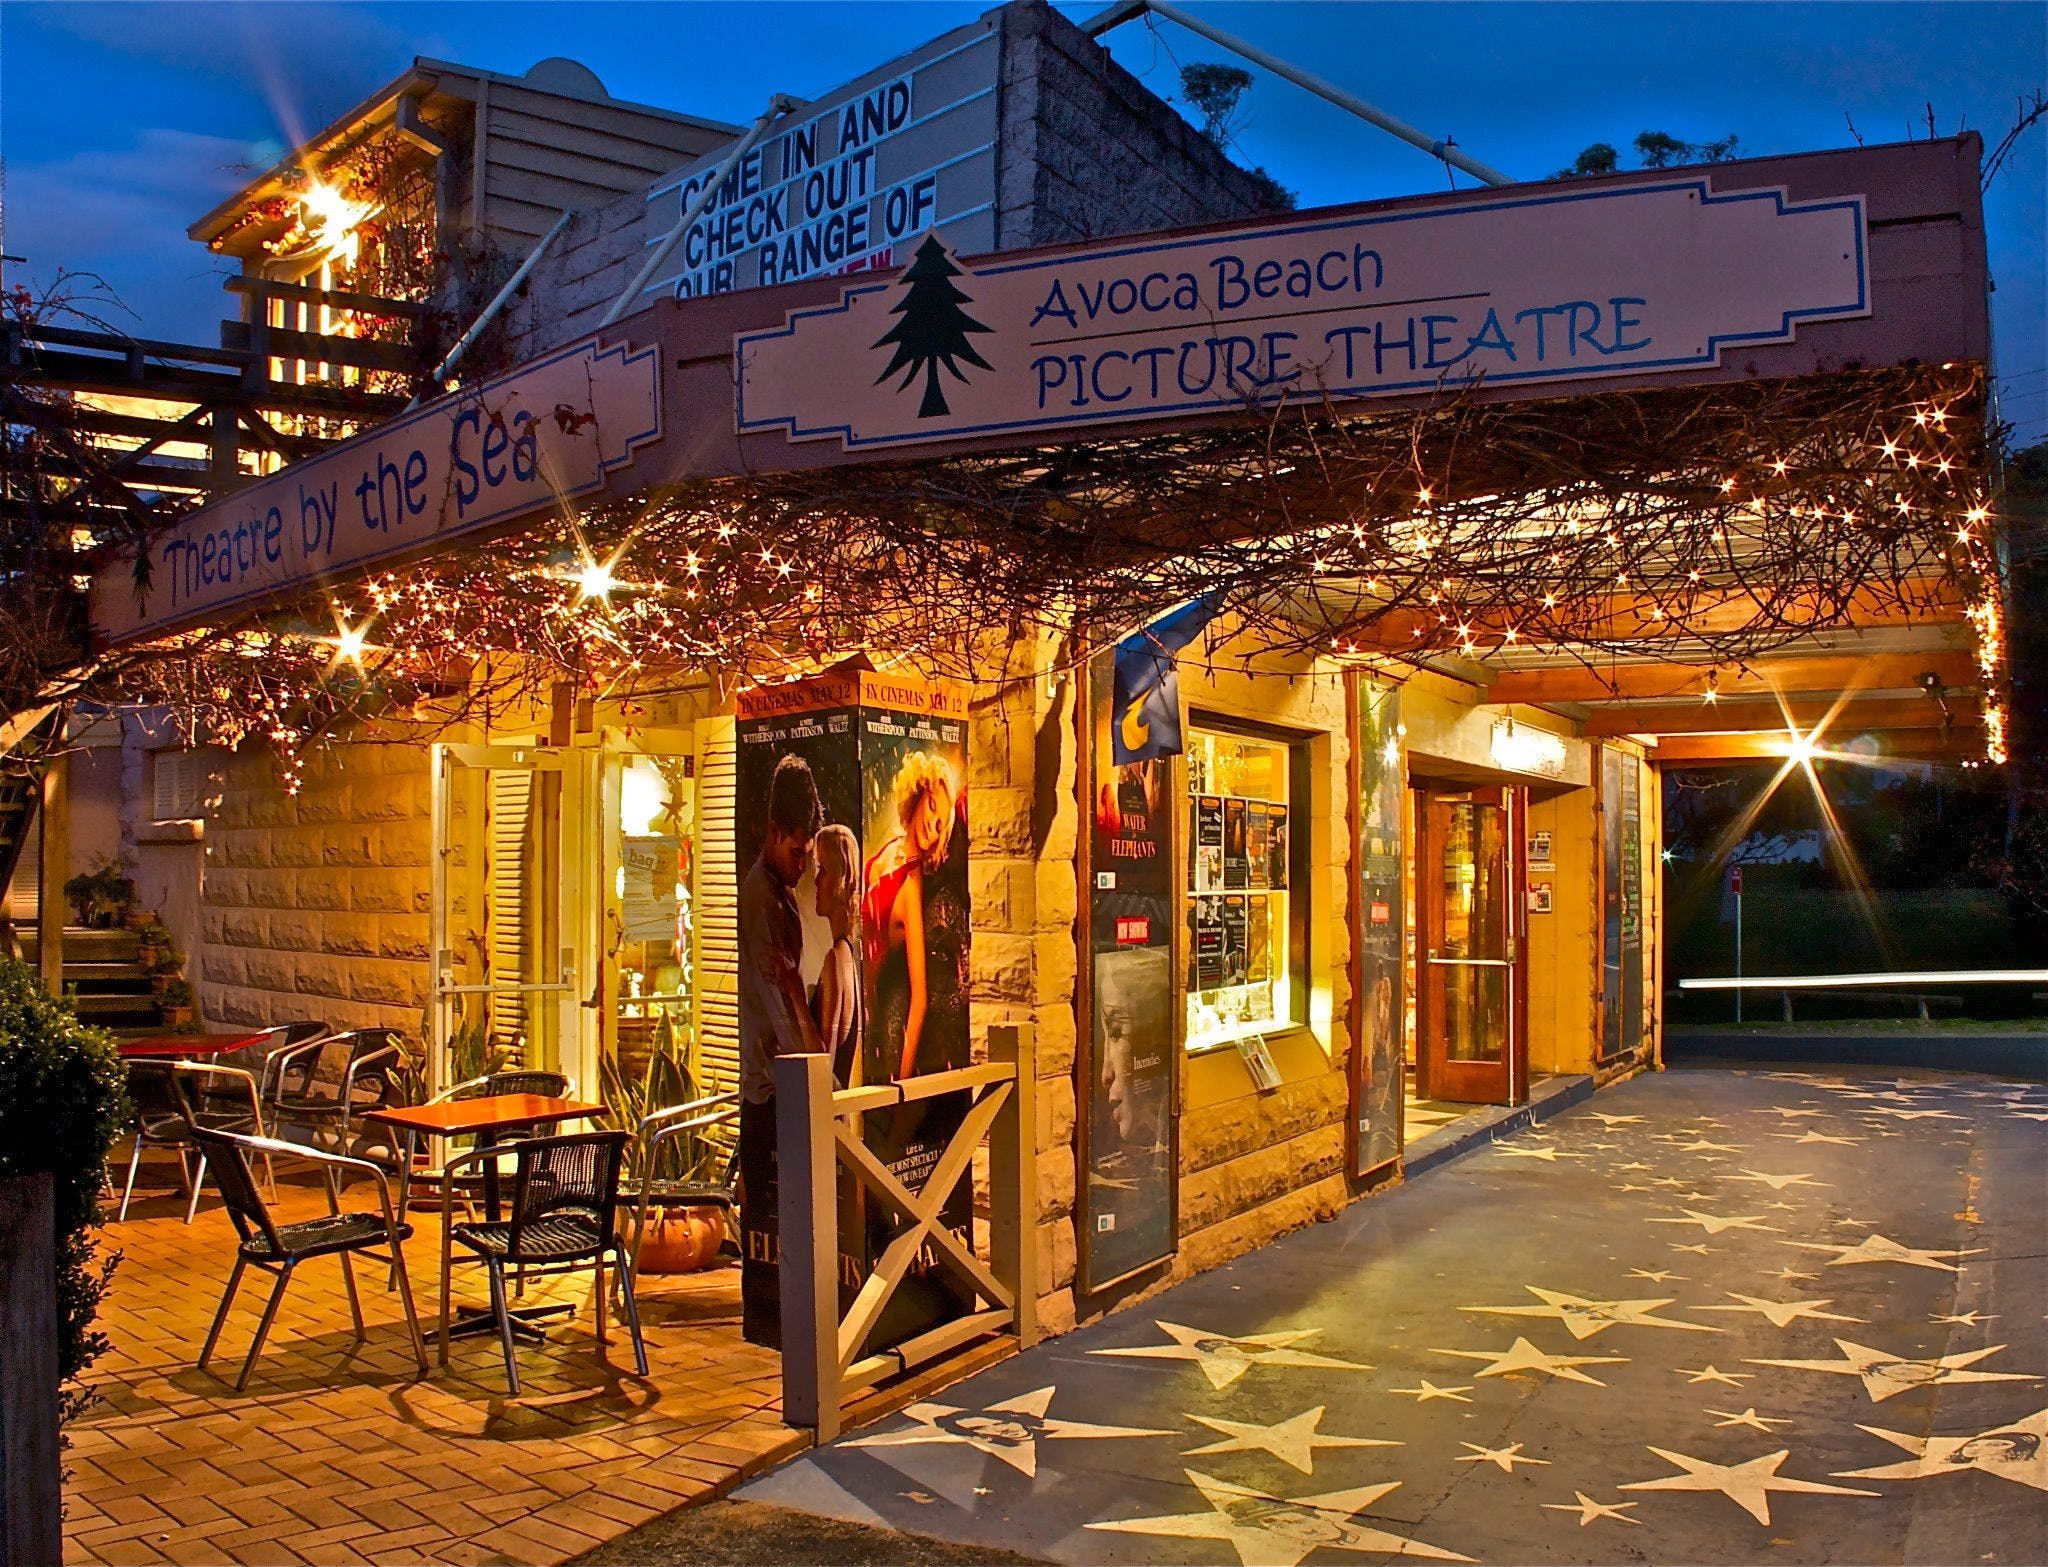 Avoca Beach Picture Theatre - Tourism Canberra